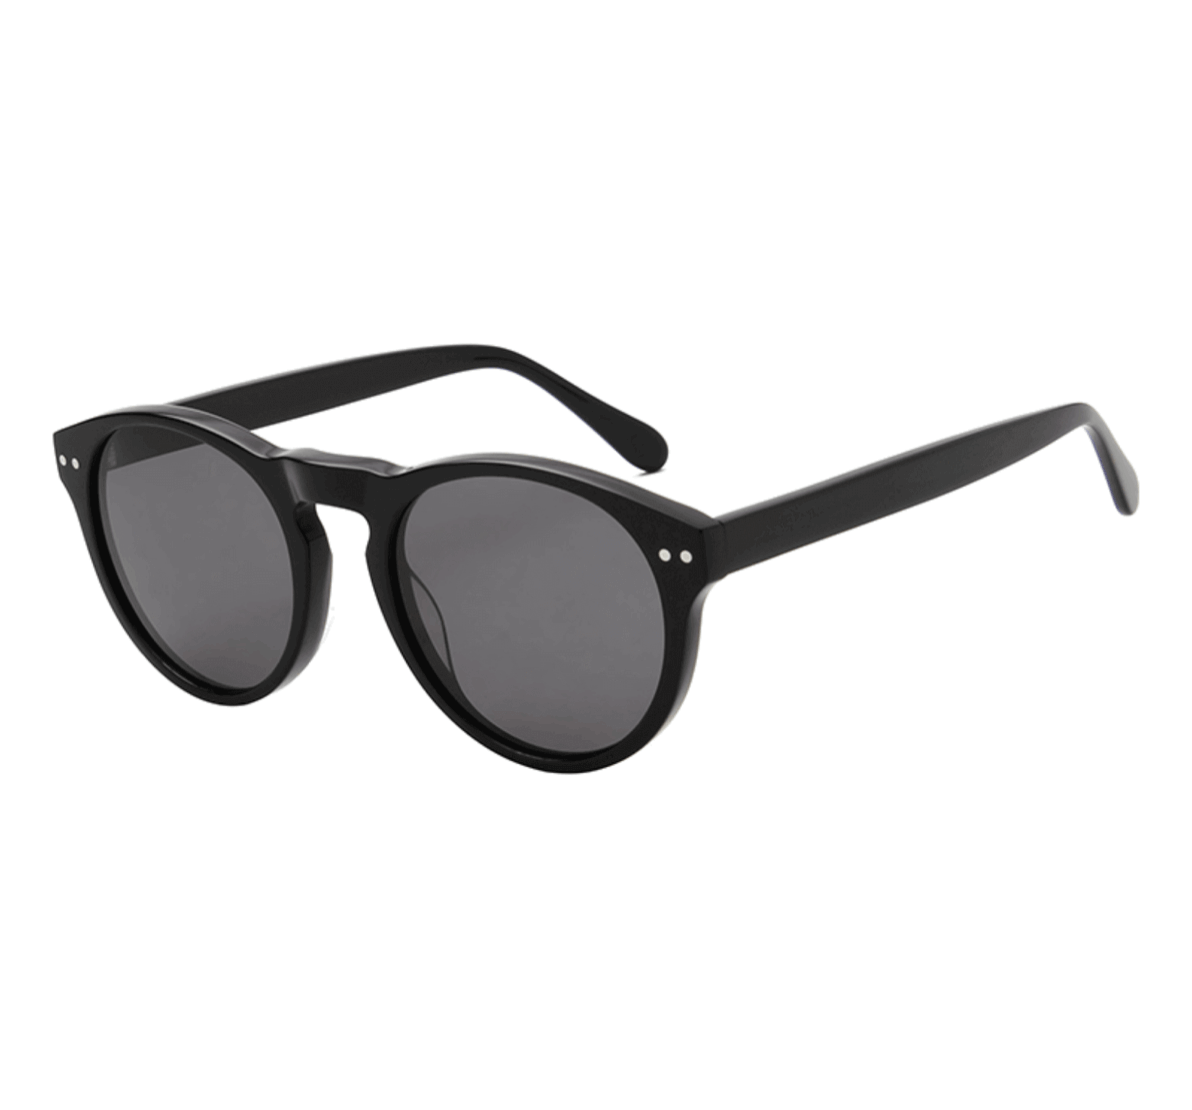 wholesale plastic sunglasses, wholesale round sunglasses, cheap plastic sunglasses in bulk, wholesale shades sunglasses, polarized sunglasses suppliers